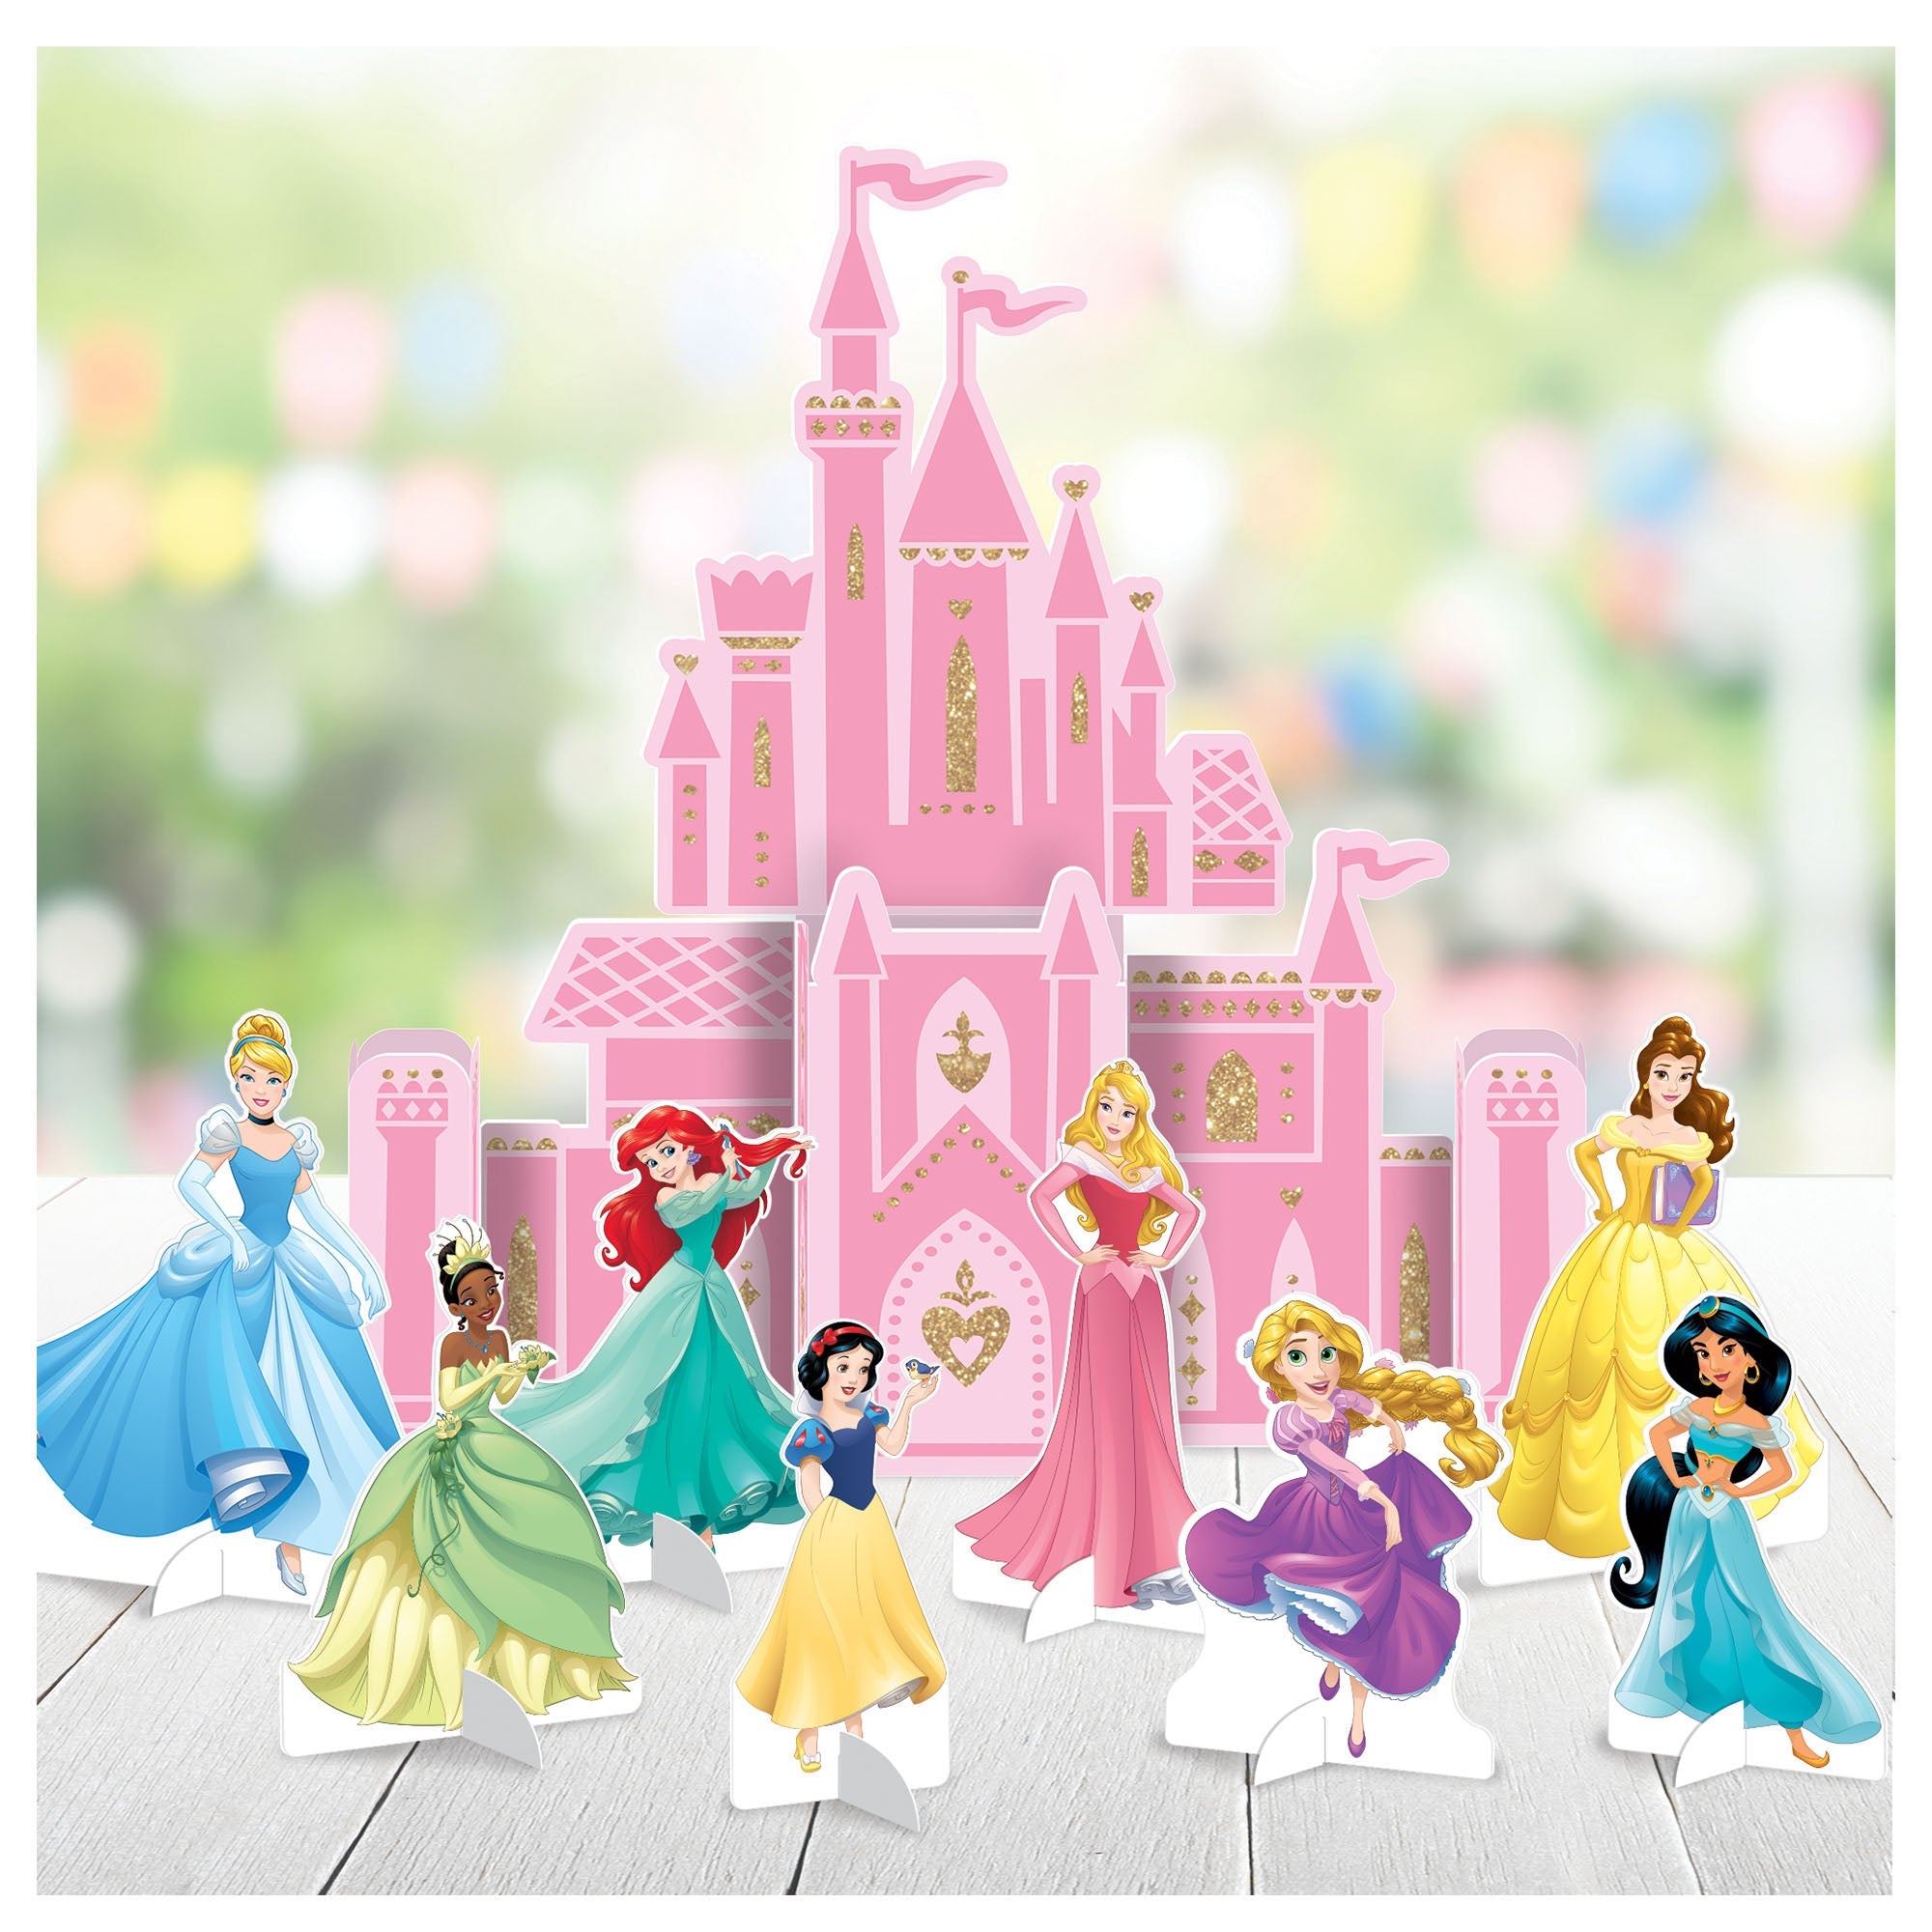 Disney Princess 9 piece Table Decoration Kit